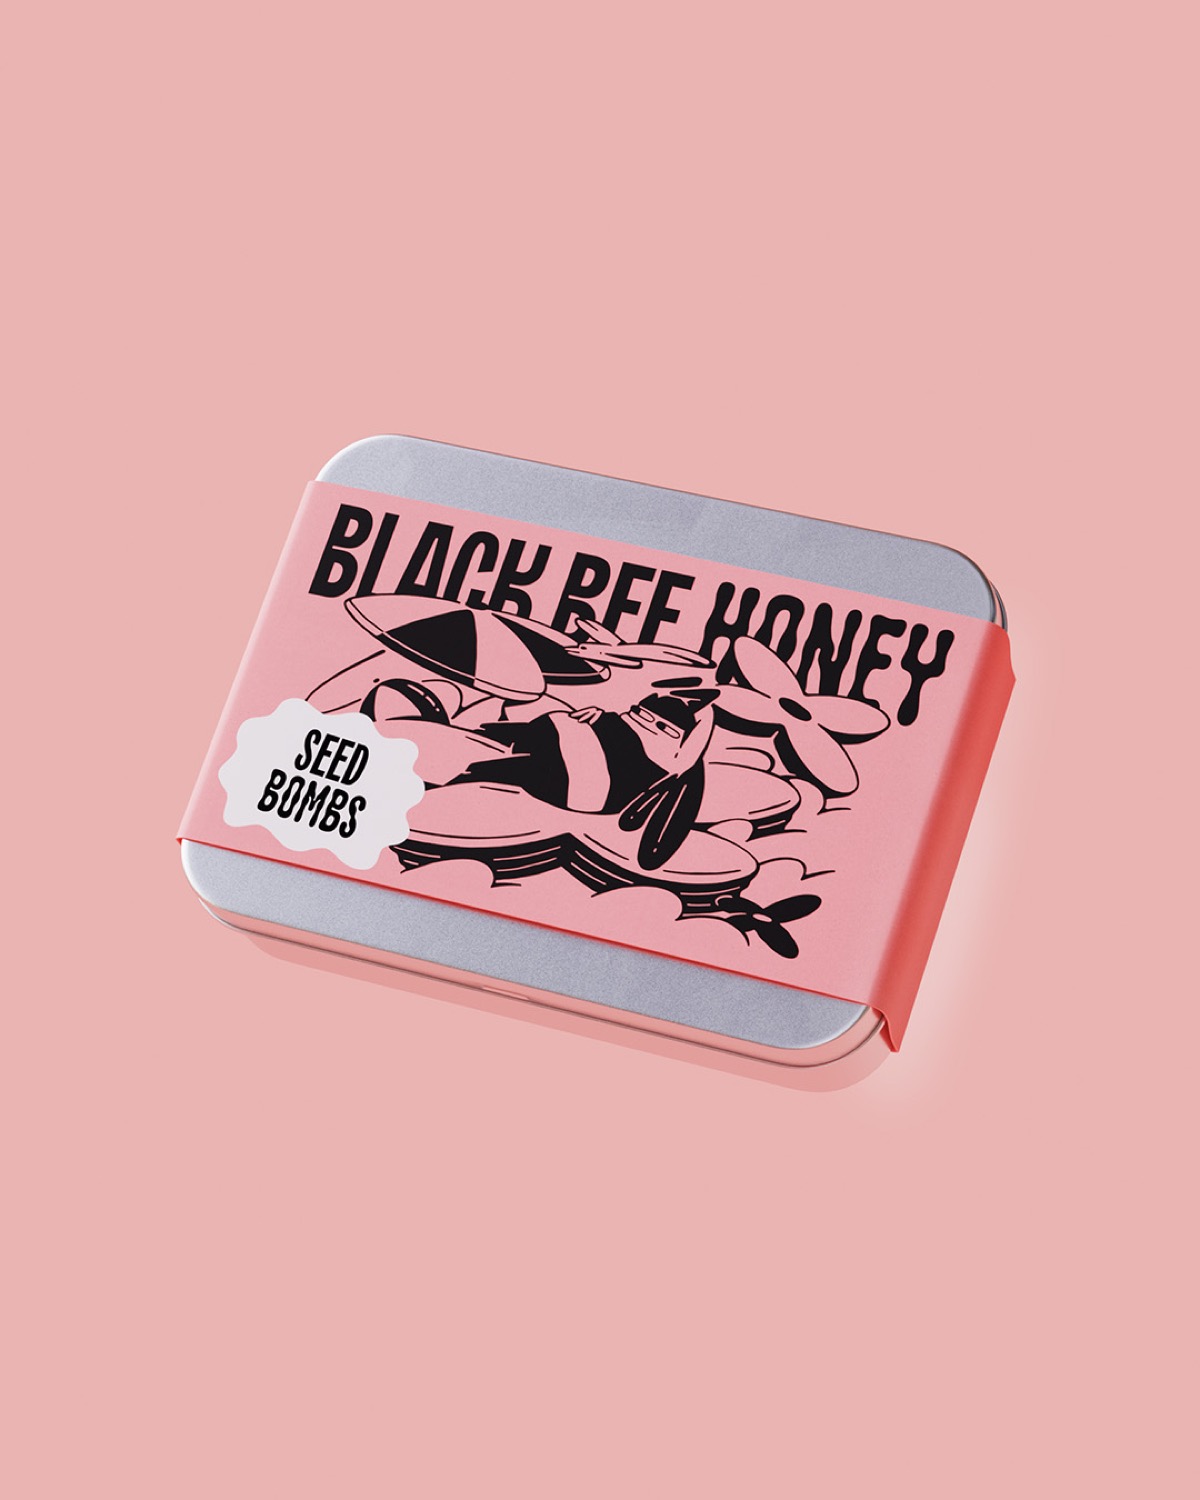 Black Bee Honey蜂蜜包装设计